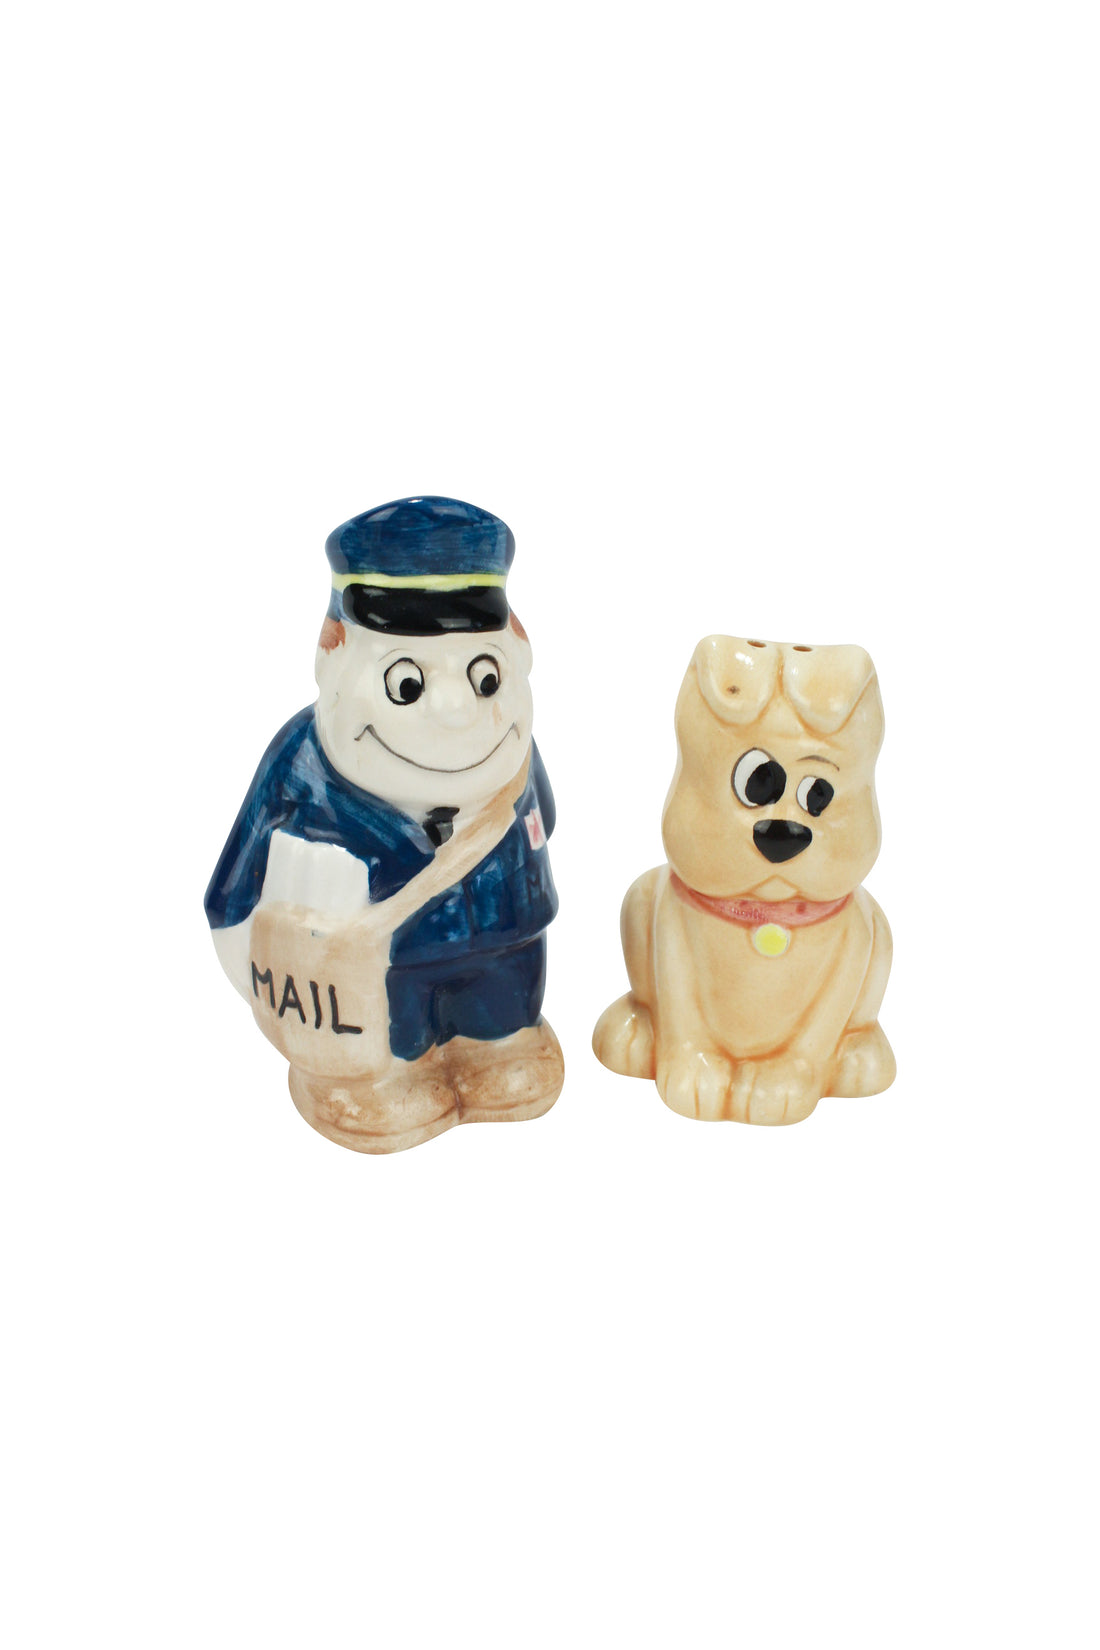 Mailman & Dog Shakers